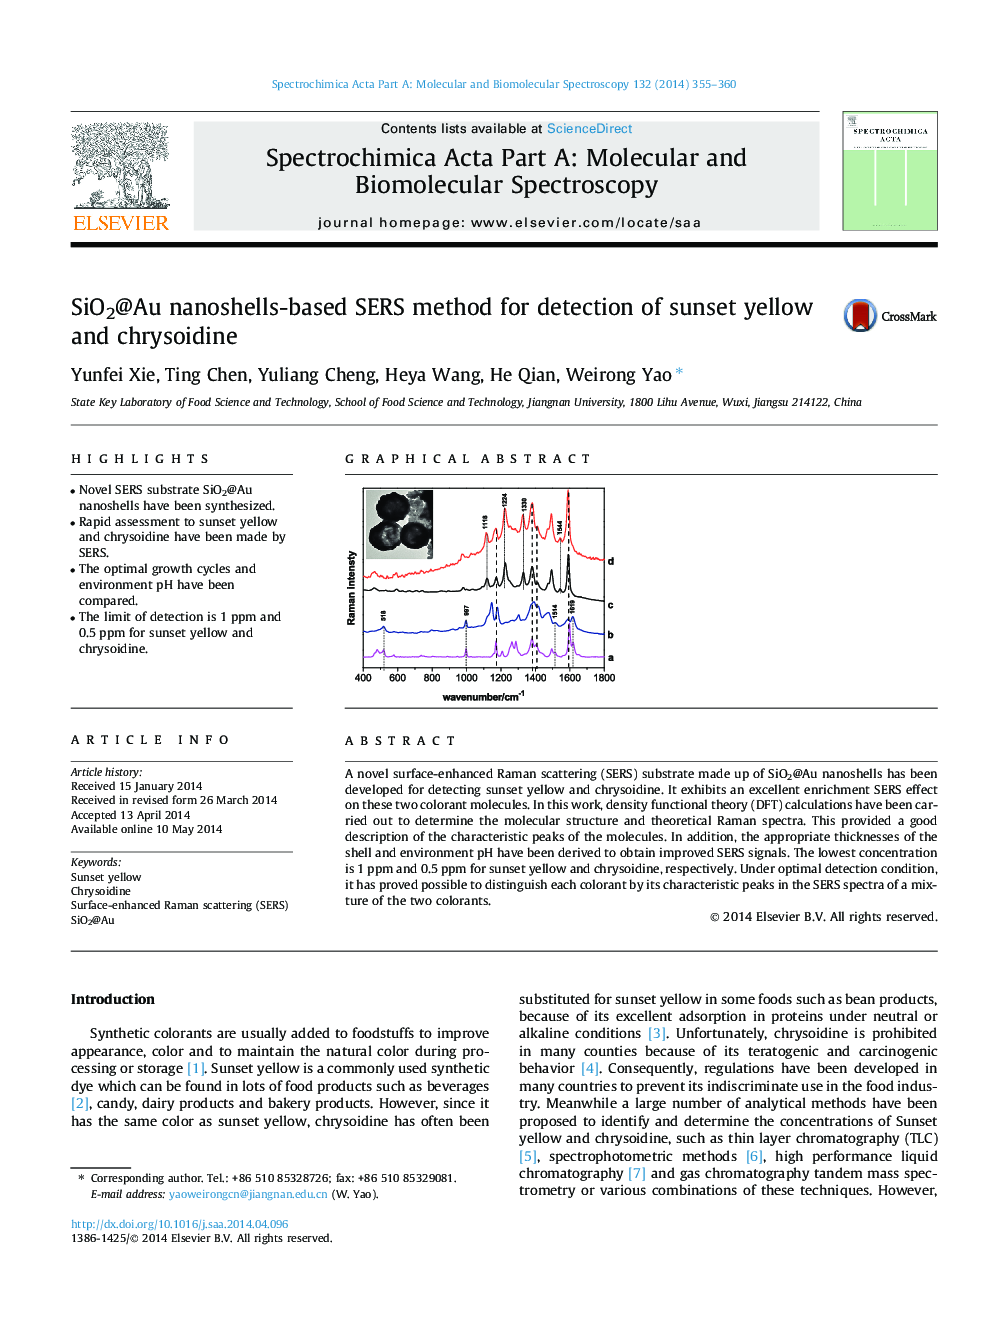 SiO2@Au nanoshells-based SERS method for detection of sunset yellow and chrysoidine